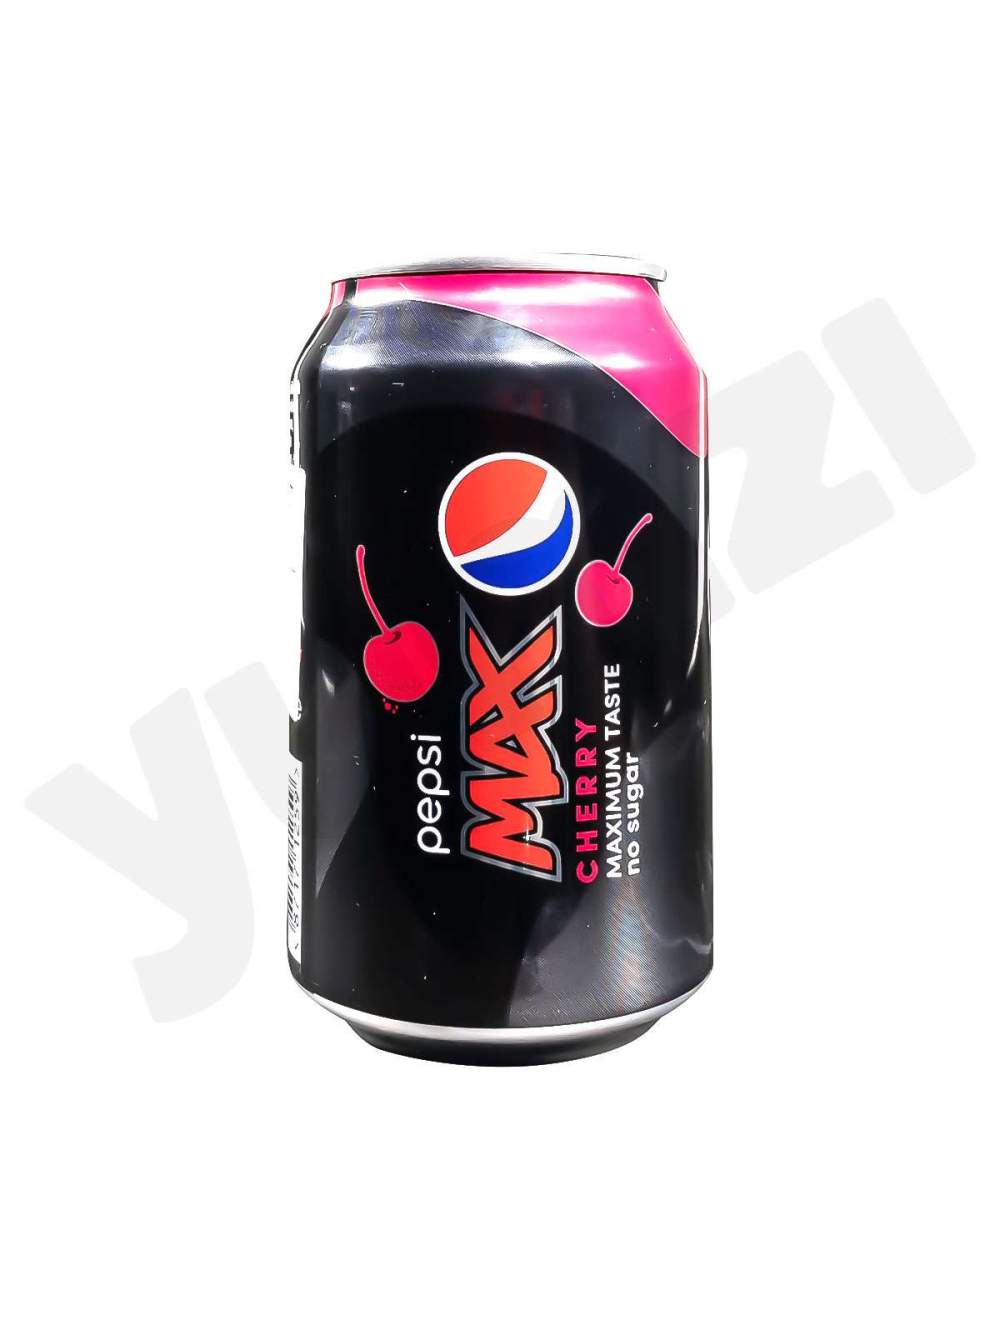 Pepsi-cola Pepsi Max No Sugar Soda 275ml X 6 Pack Cans 6pk is not halal